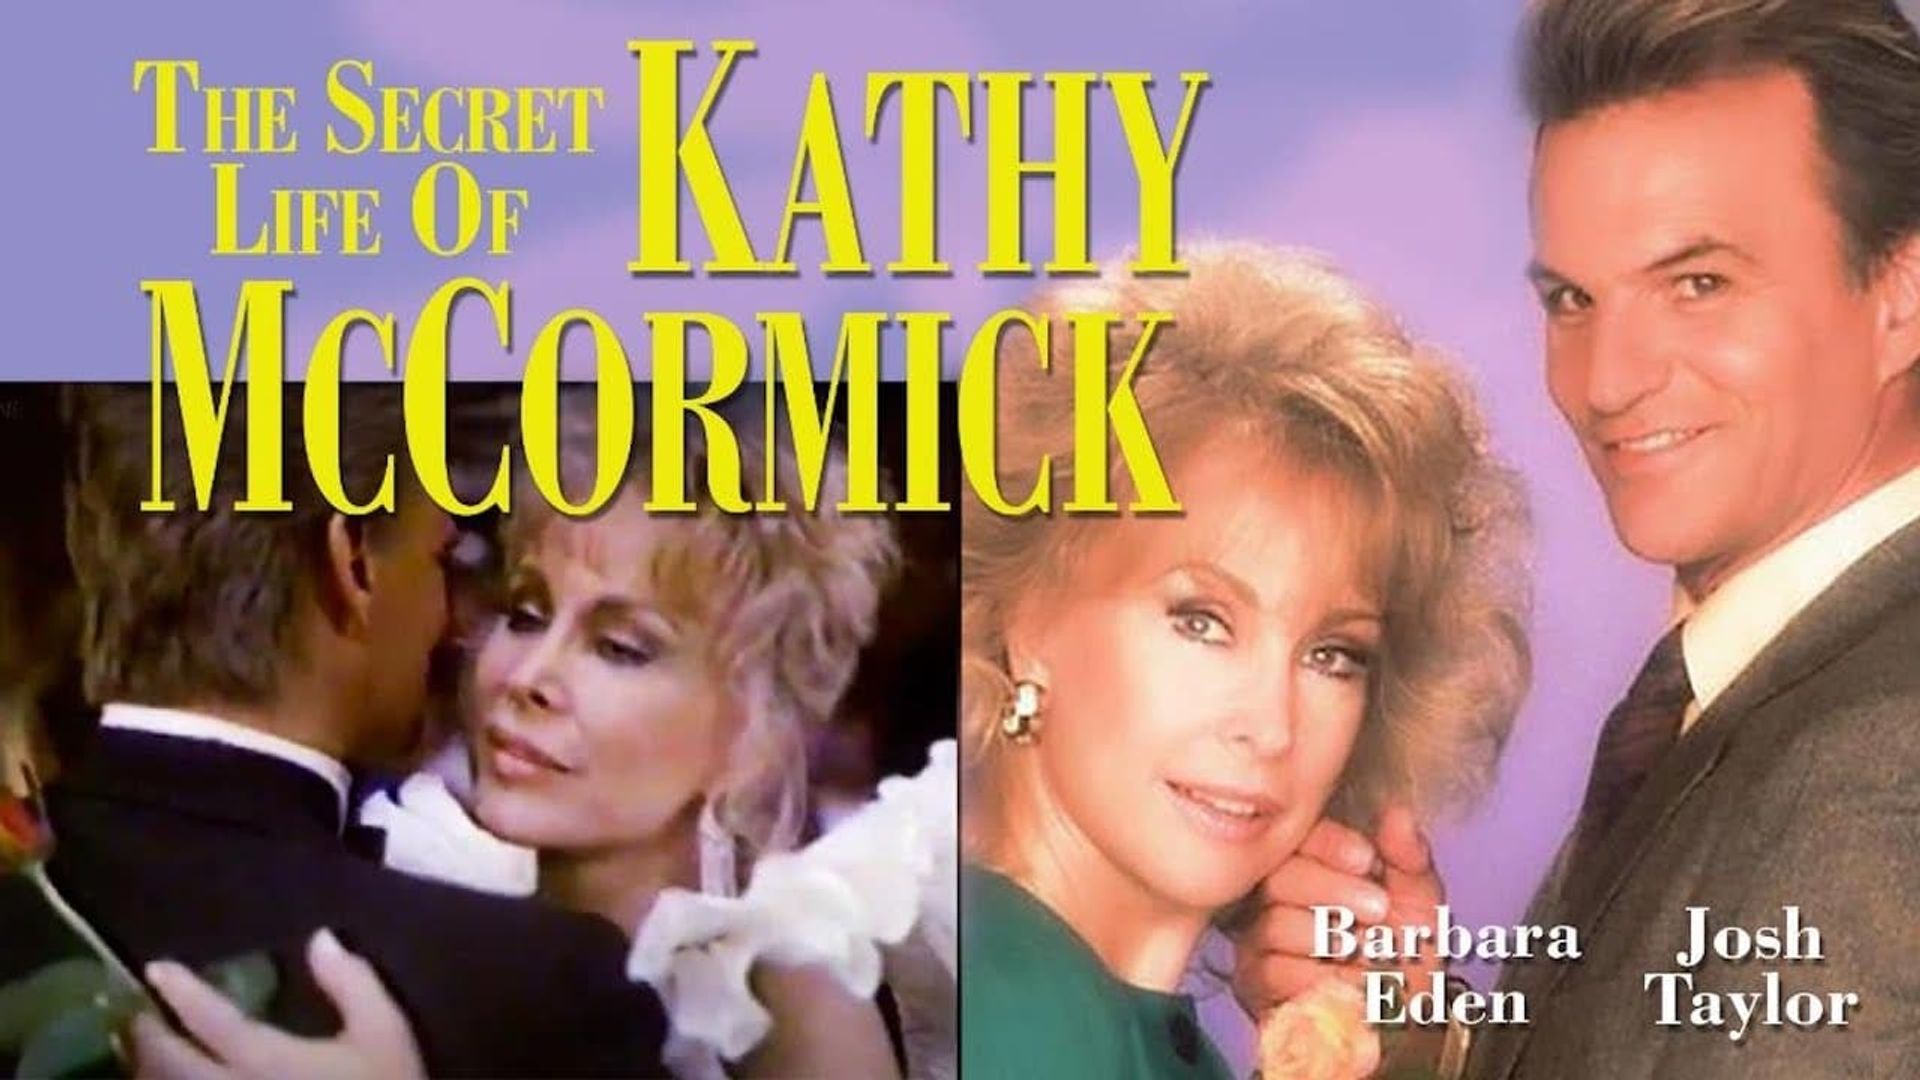 The Secret Life of Kathy McCormick background